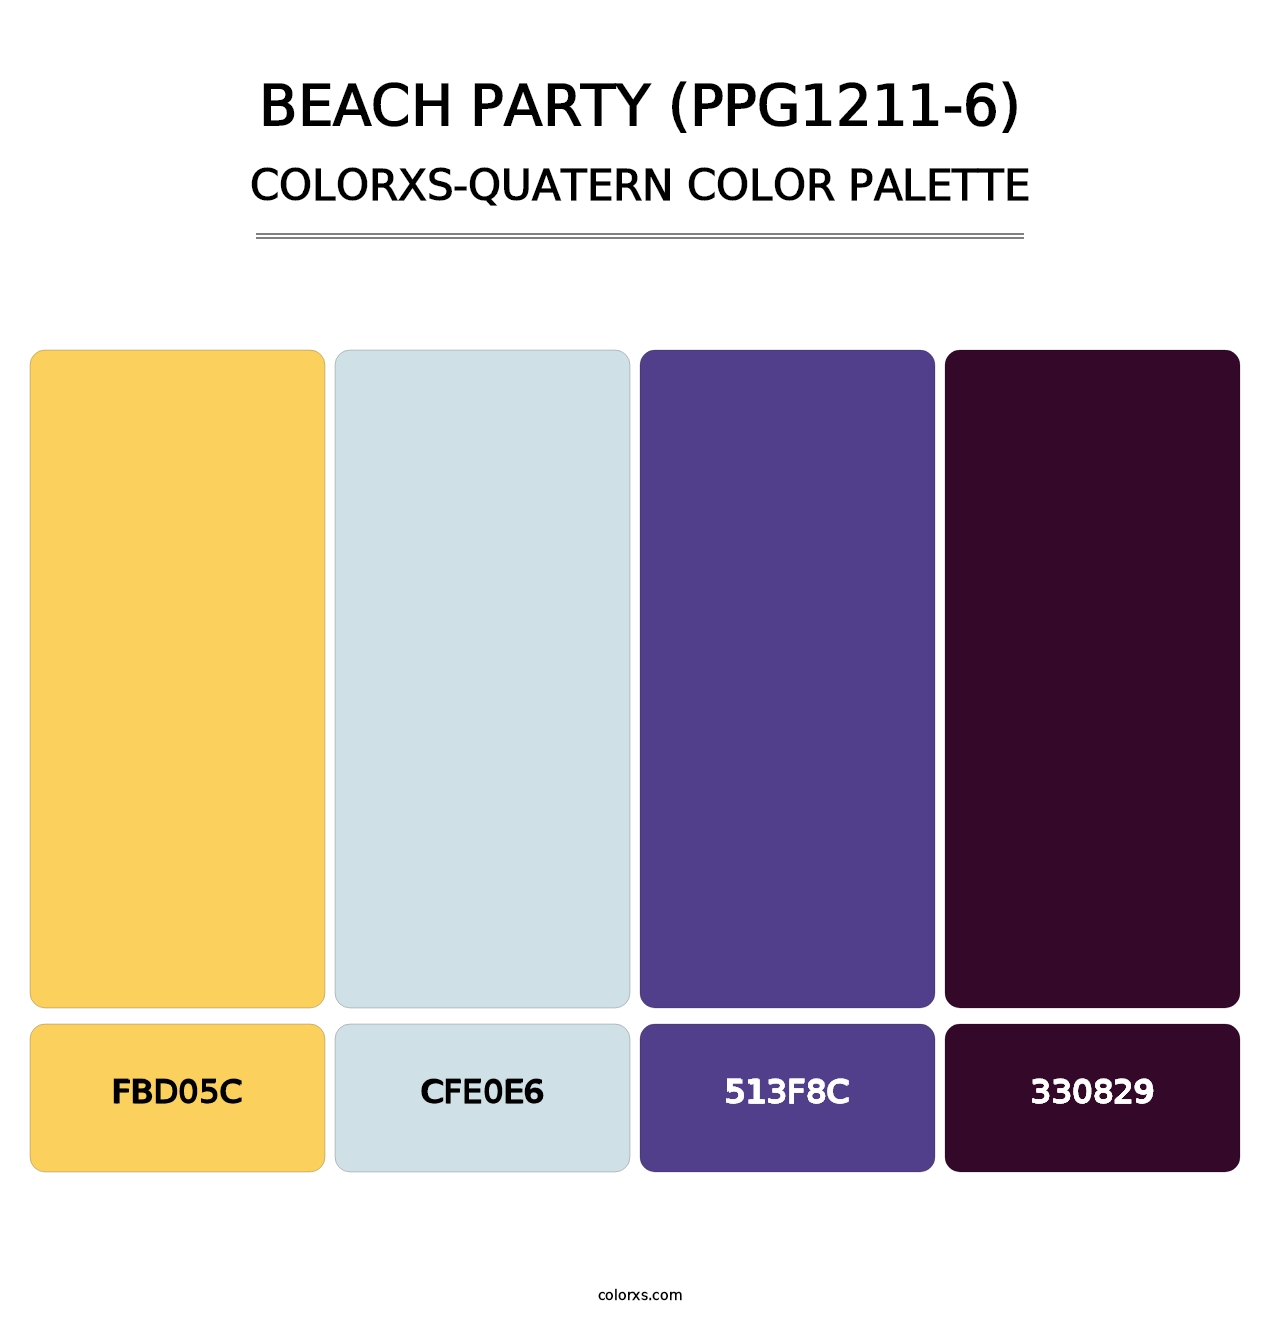 Beach Party (PPG1211-6) - Colorxs Quatern Palette